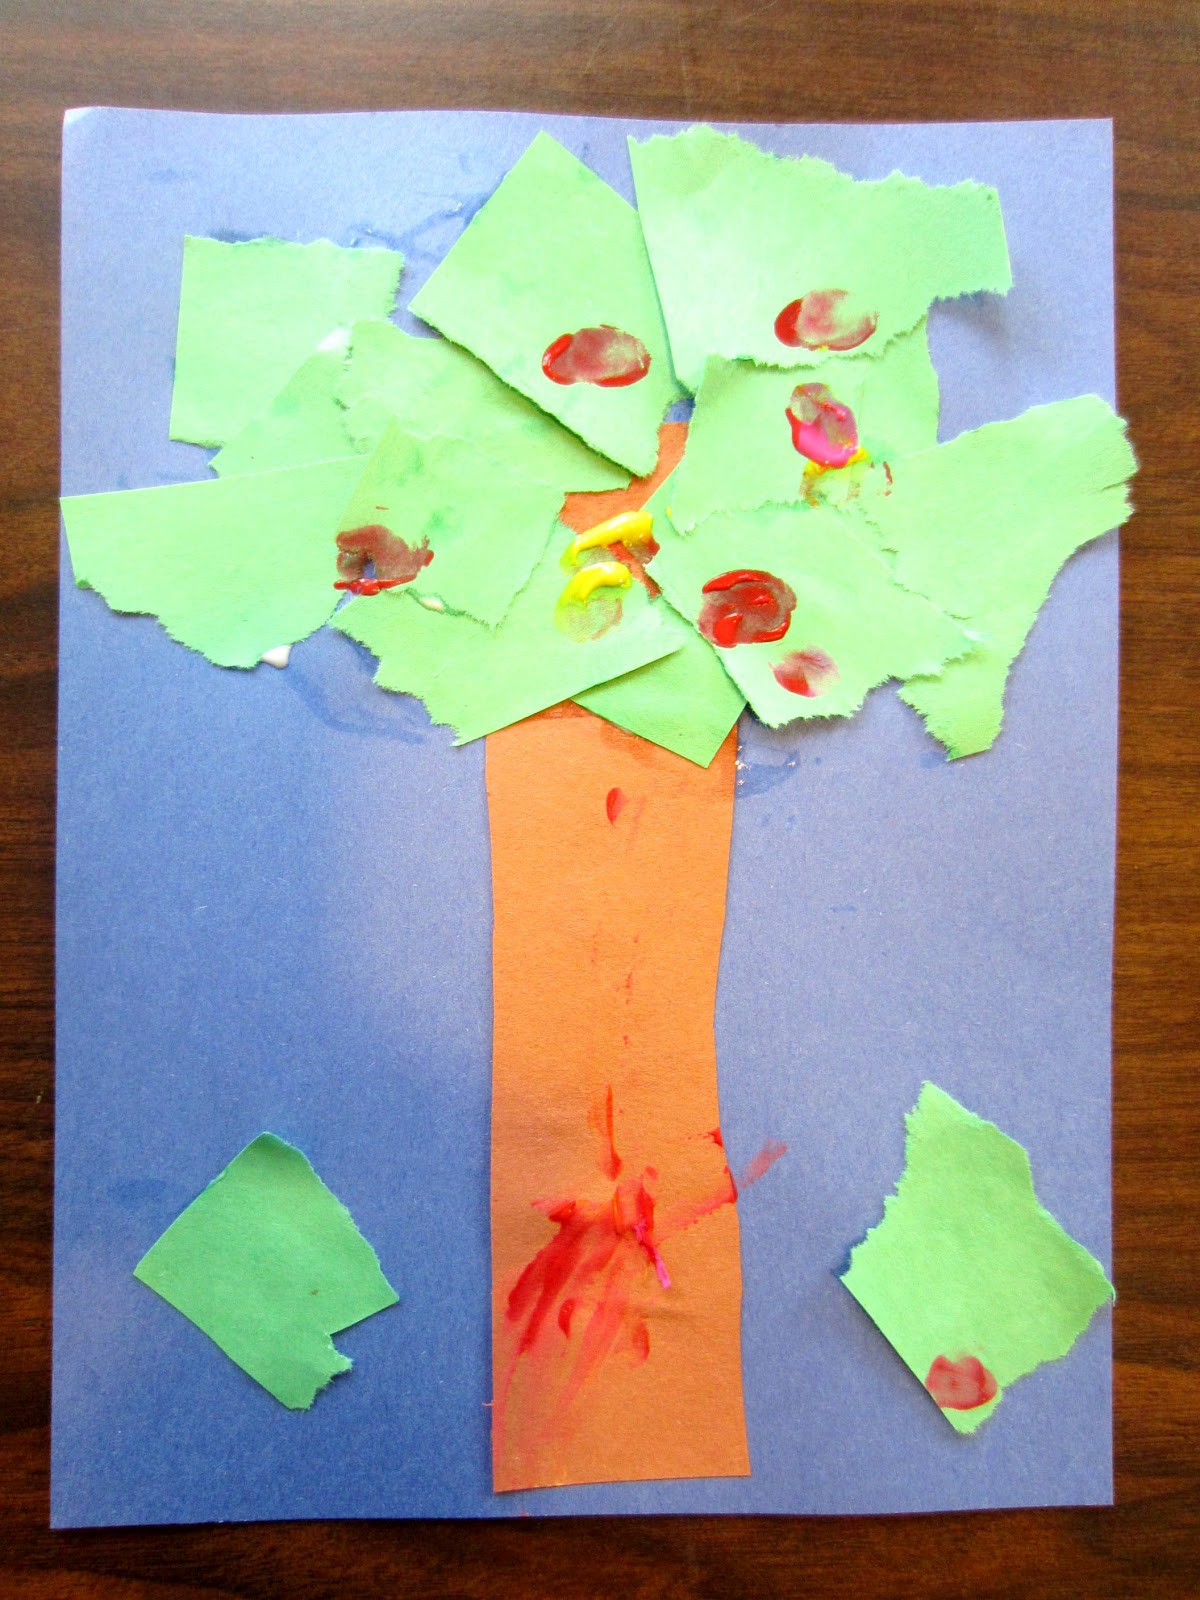 Build An Apple Tree (Preschool & Toddler Craft)